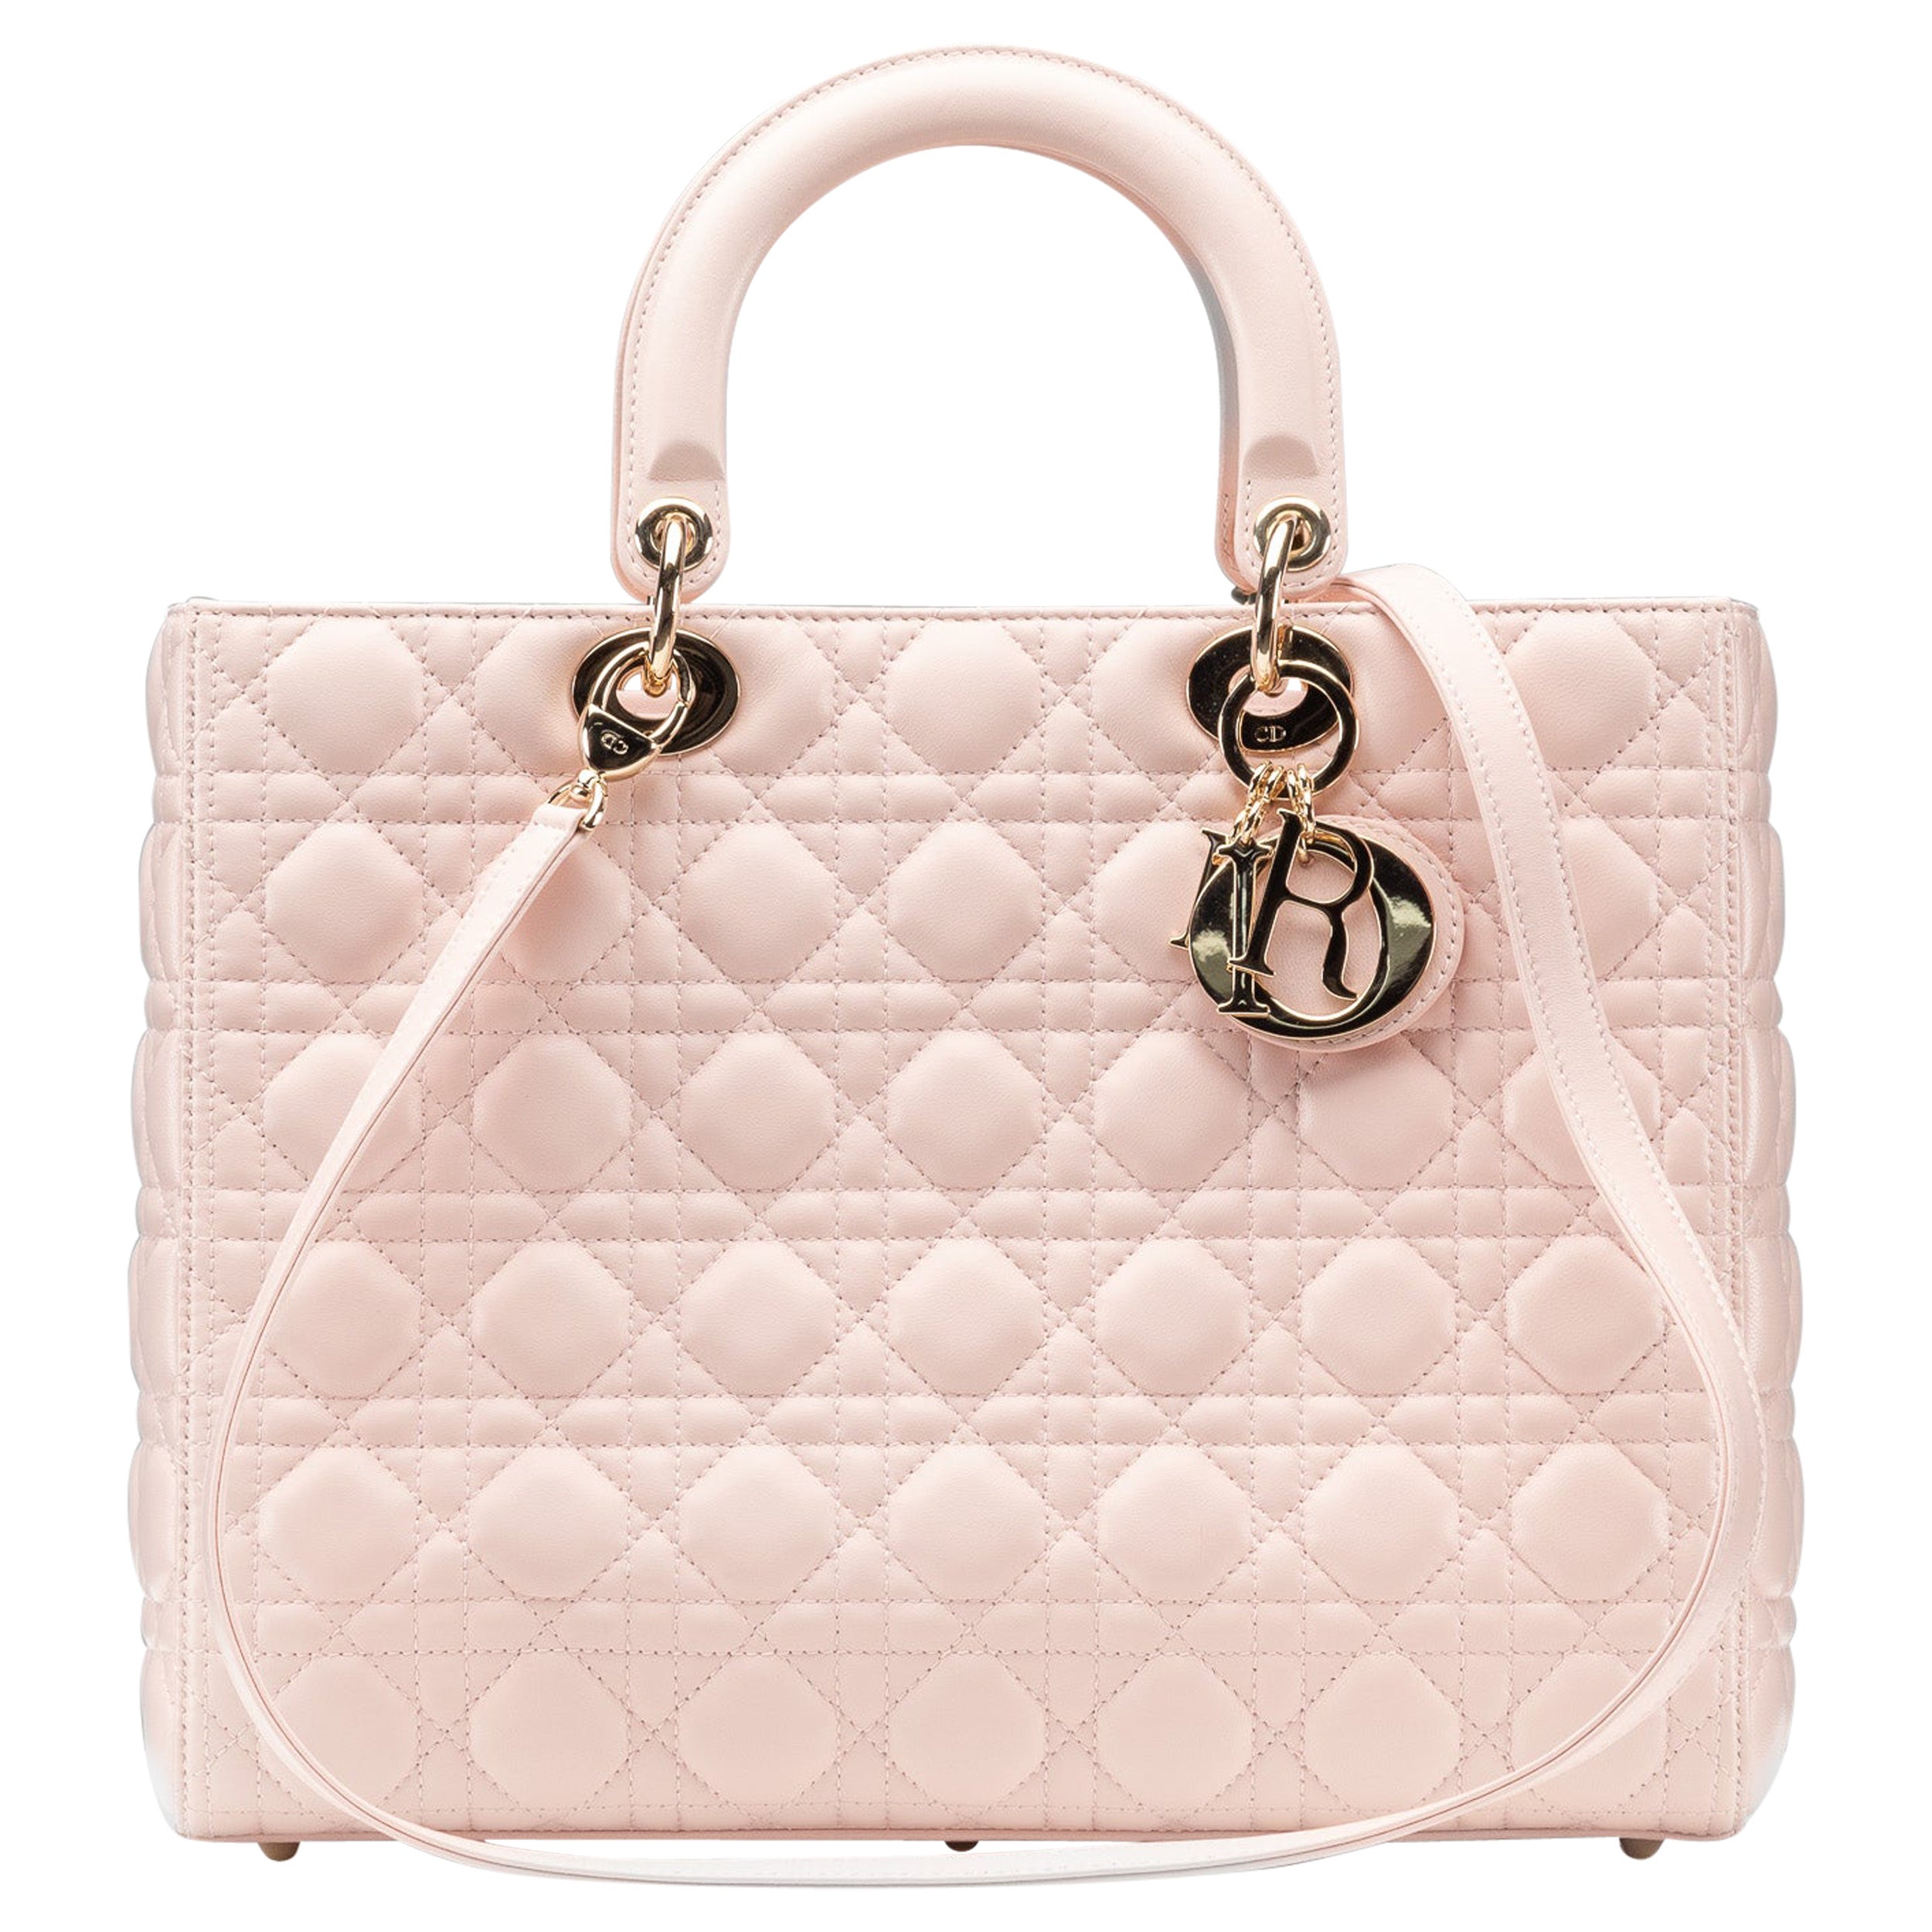 Lady Dior Tote Bag Large Light Pink Christian Dior For Sale